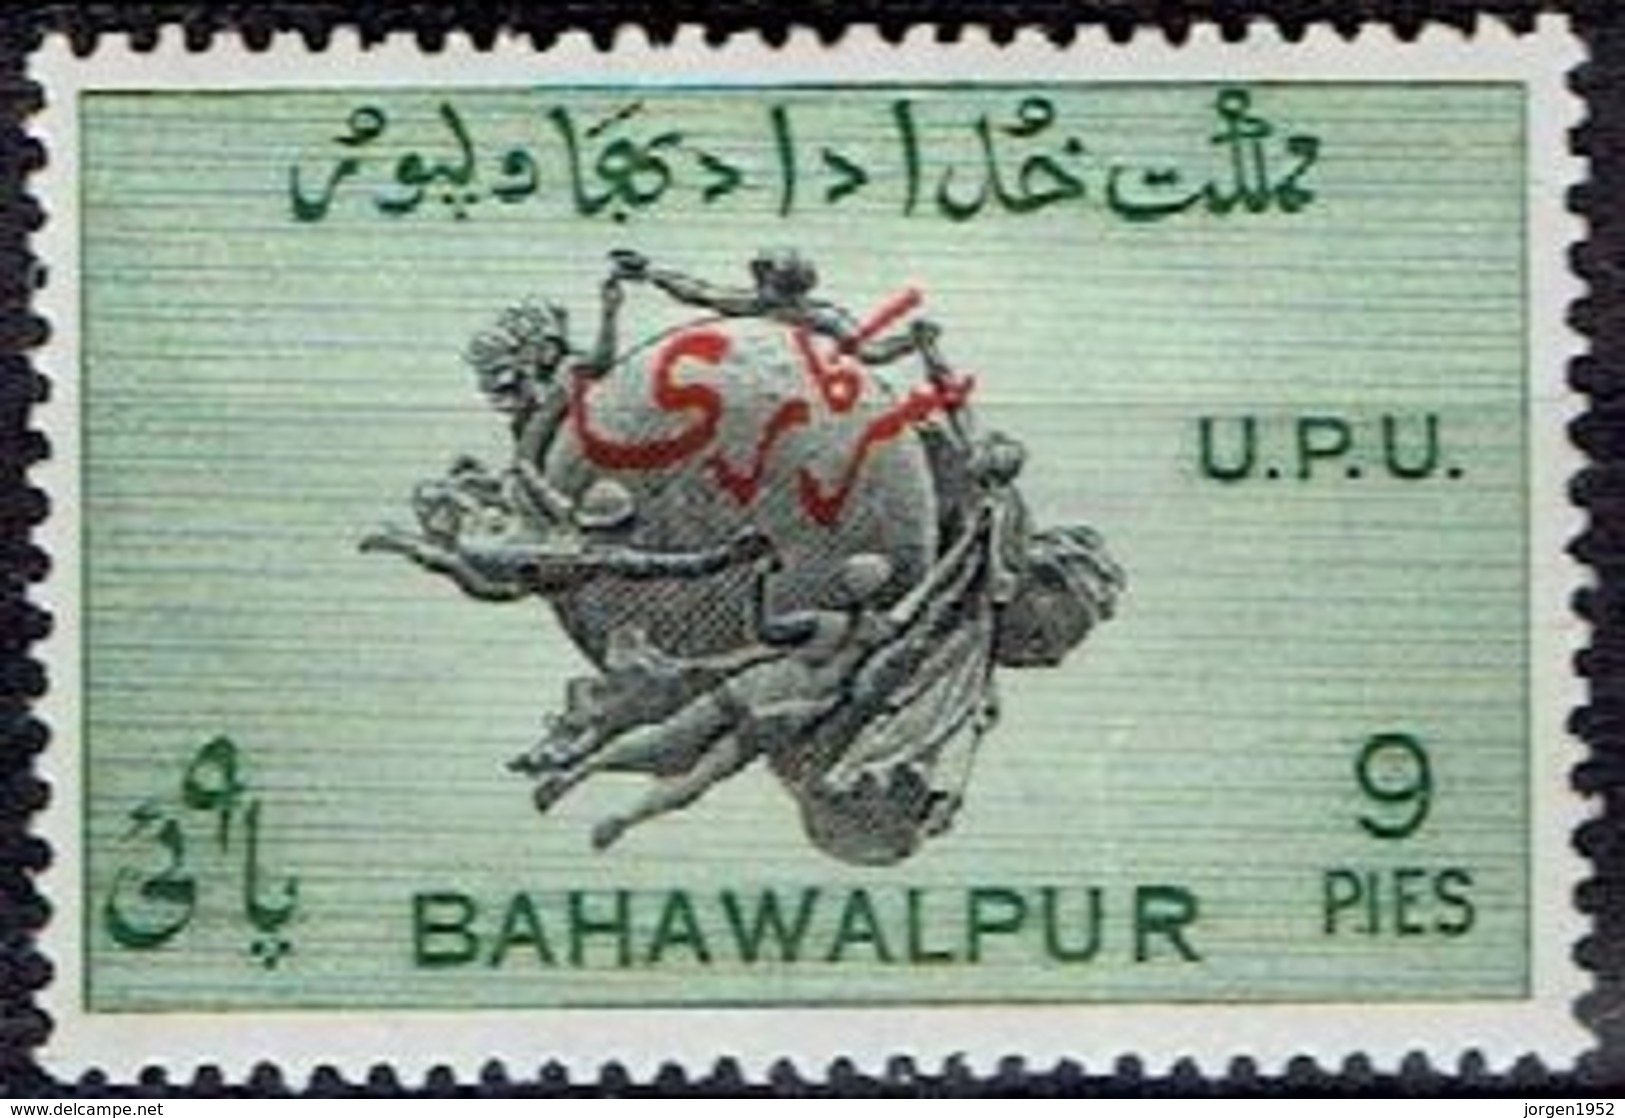 BAHAWALPUR # FROM 1949  STAMPWORLD  26** - Bahawalpur